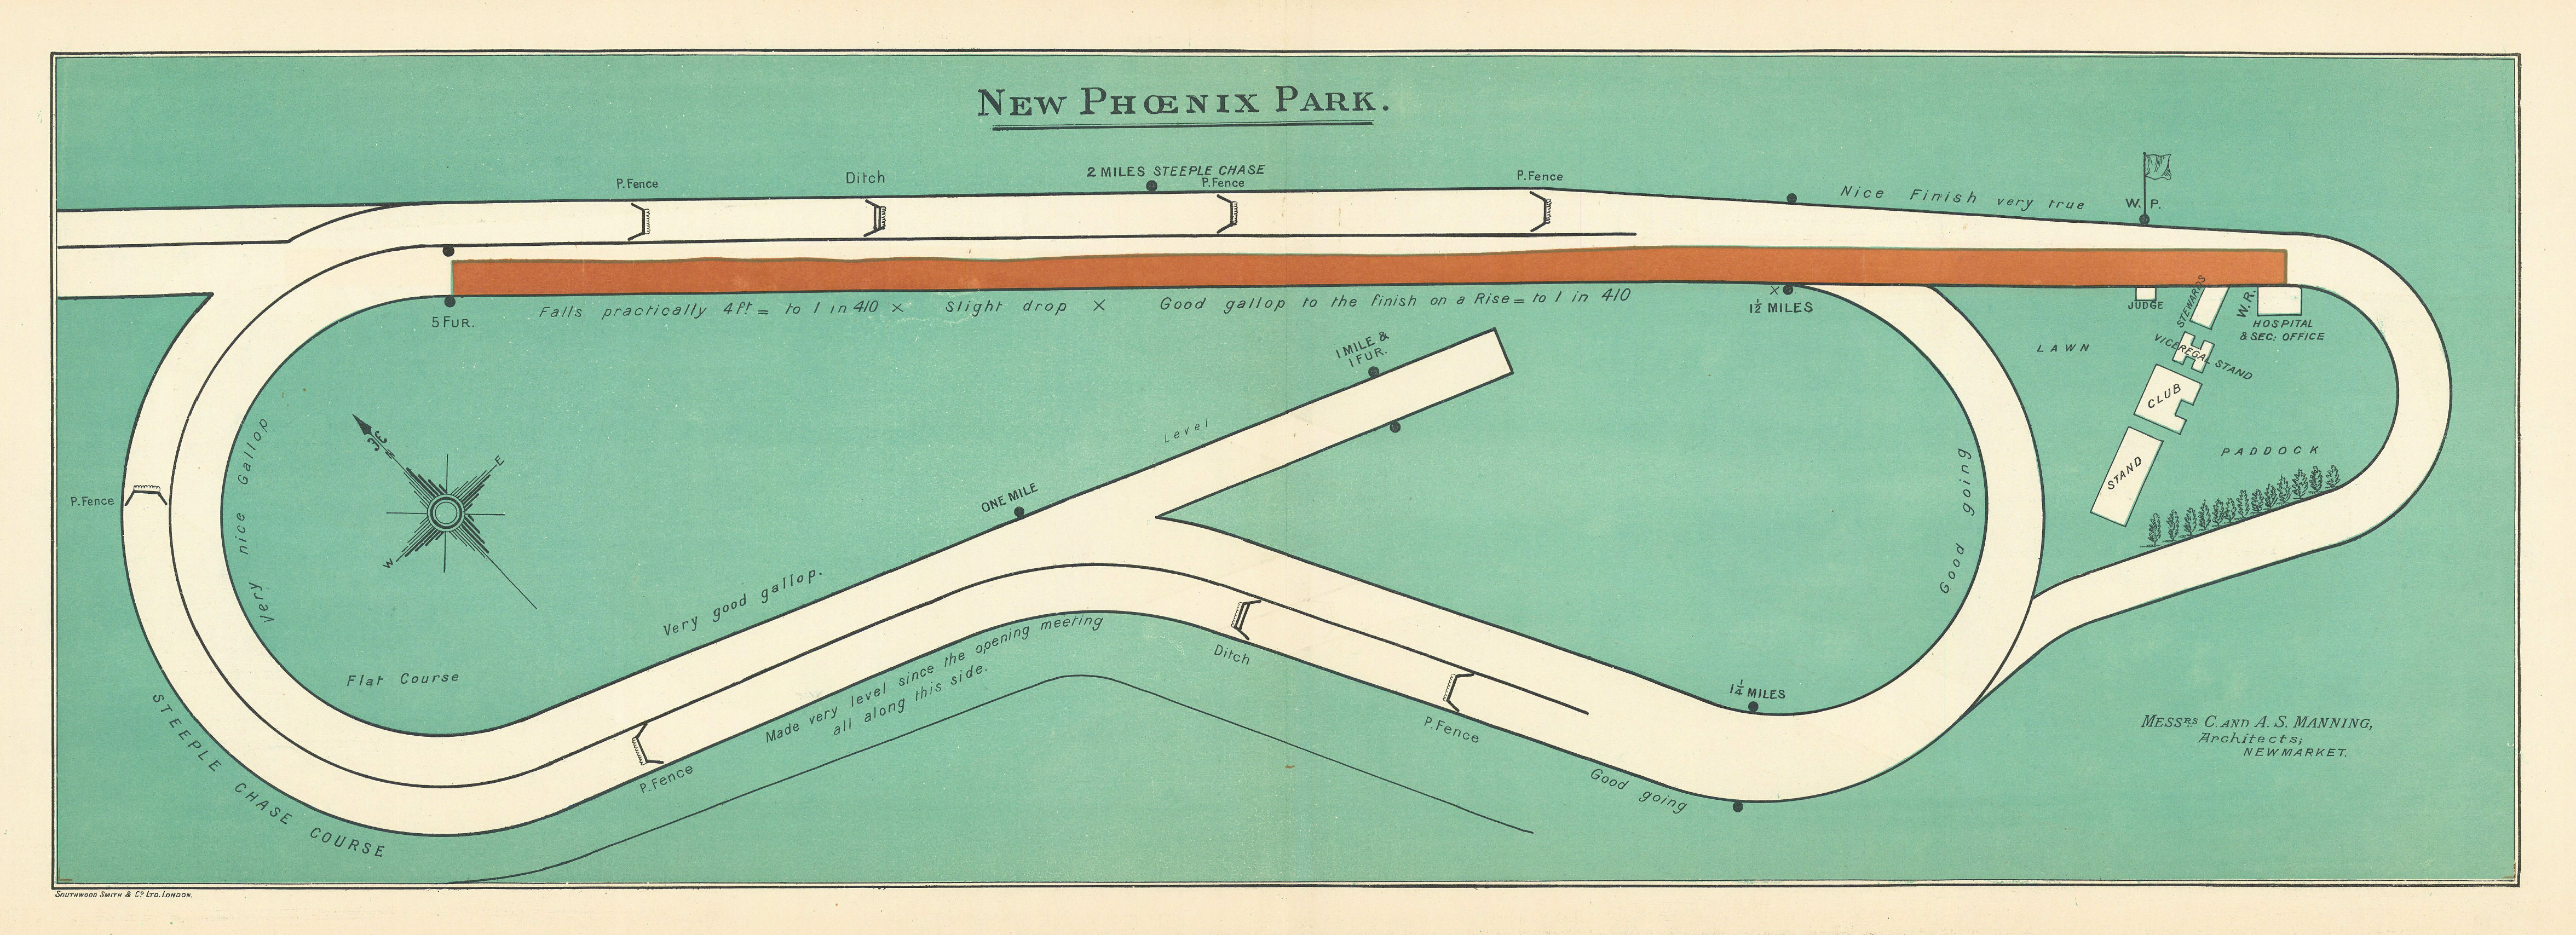 Associate Product New Phoenix Park racecourse, Ireland. Closed 1990. BAYLES 1903 old antique map